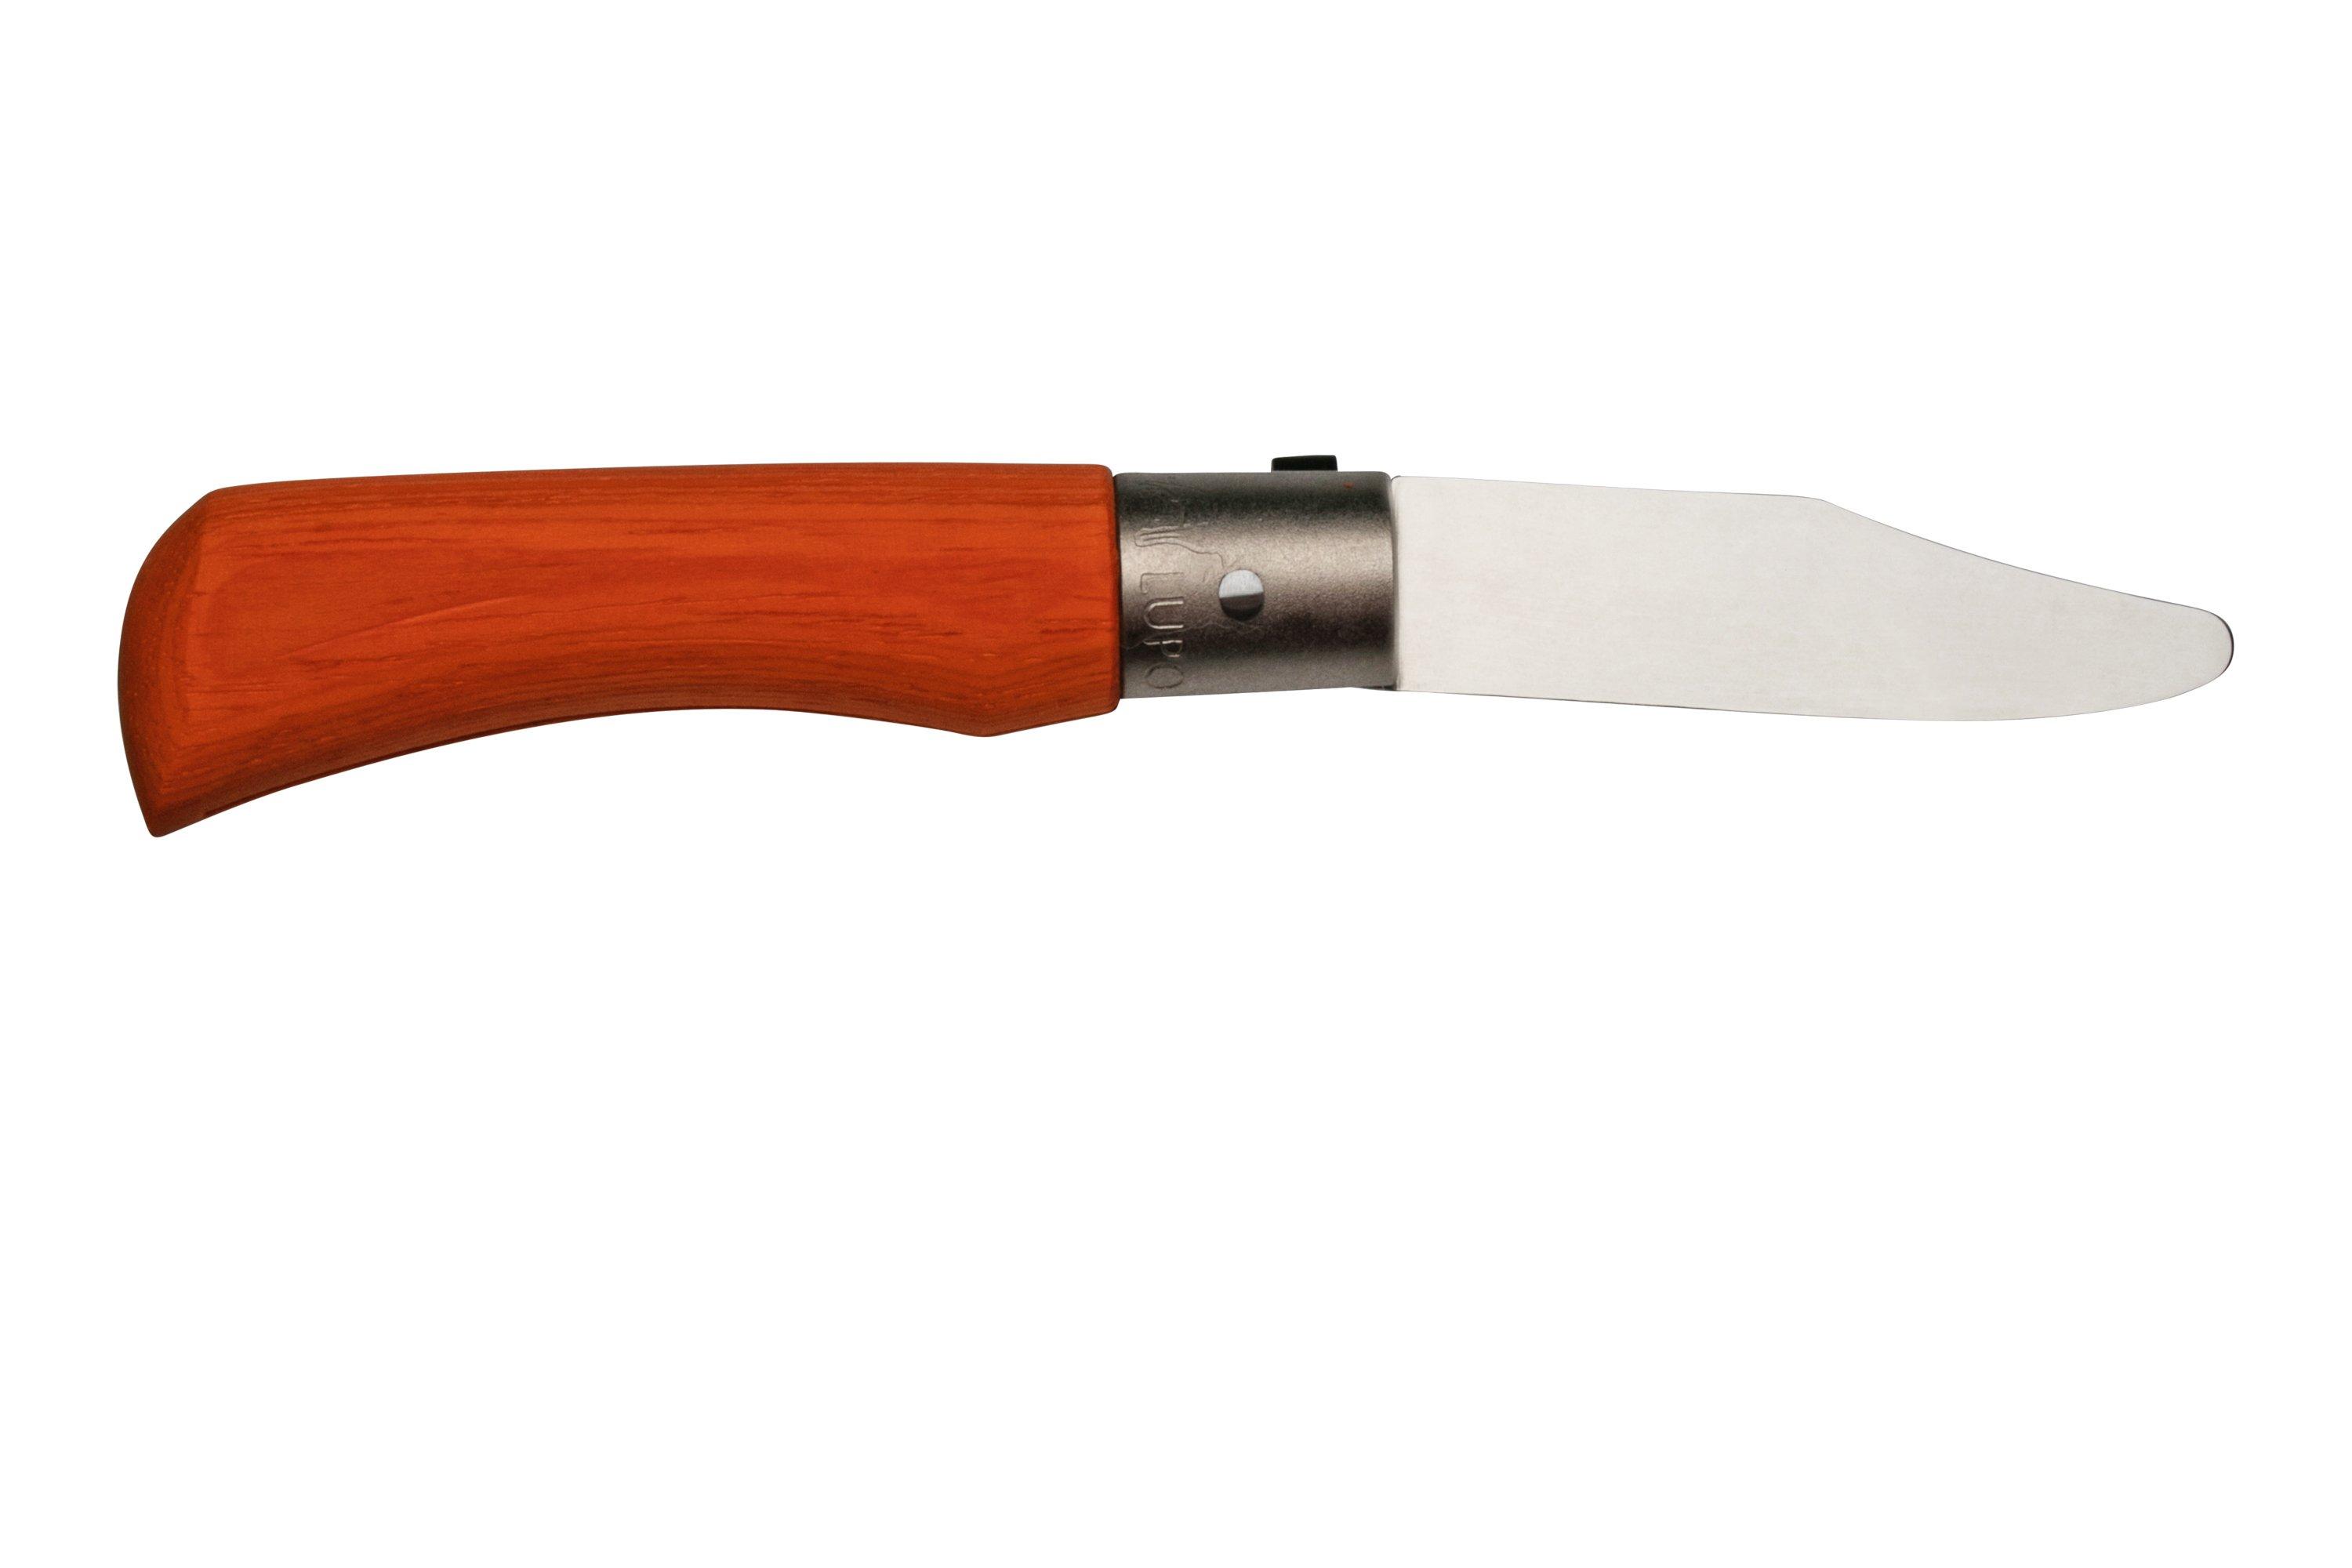 Old Bear Babies Orange XS, 9351-15-MOK coltello da tasca per bambini